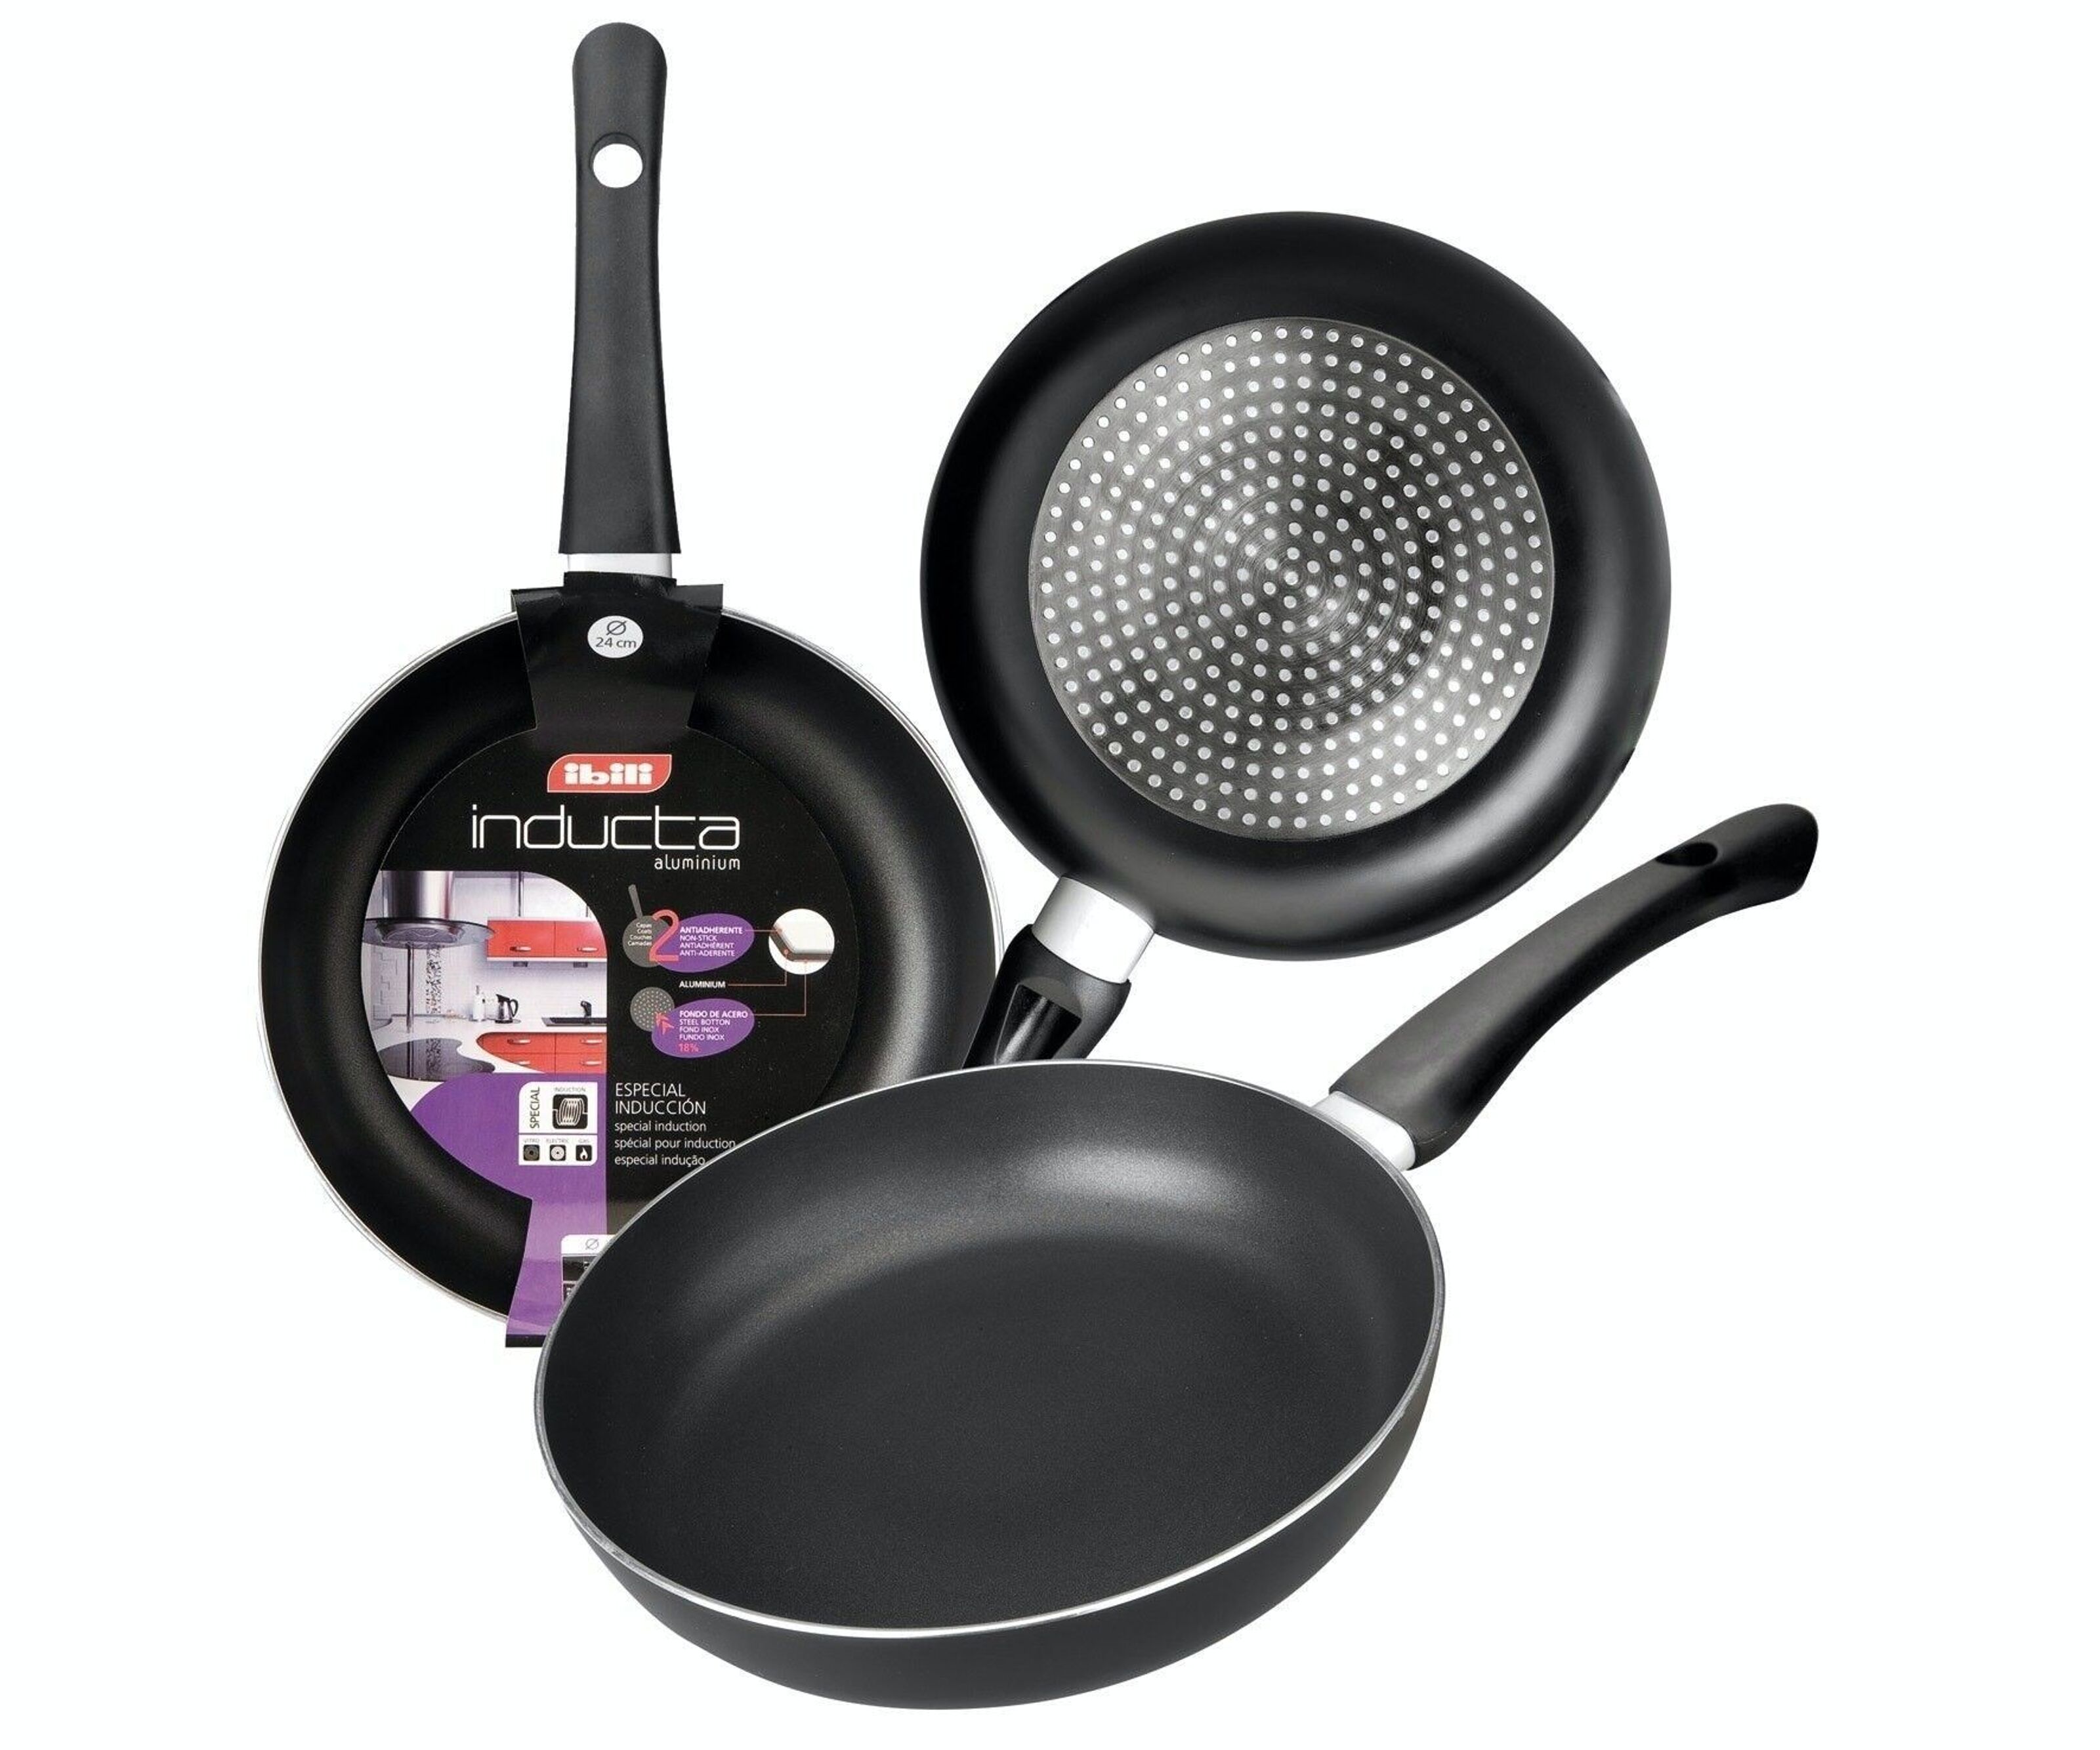 IBILI - Indubasic mini frying pan, 14 cm, Aluminum, Non-stick, Suitable for  induction